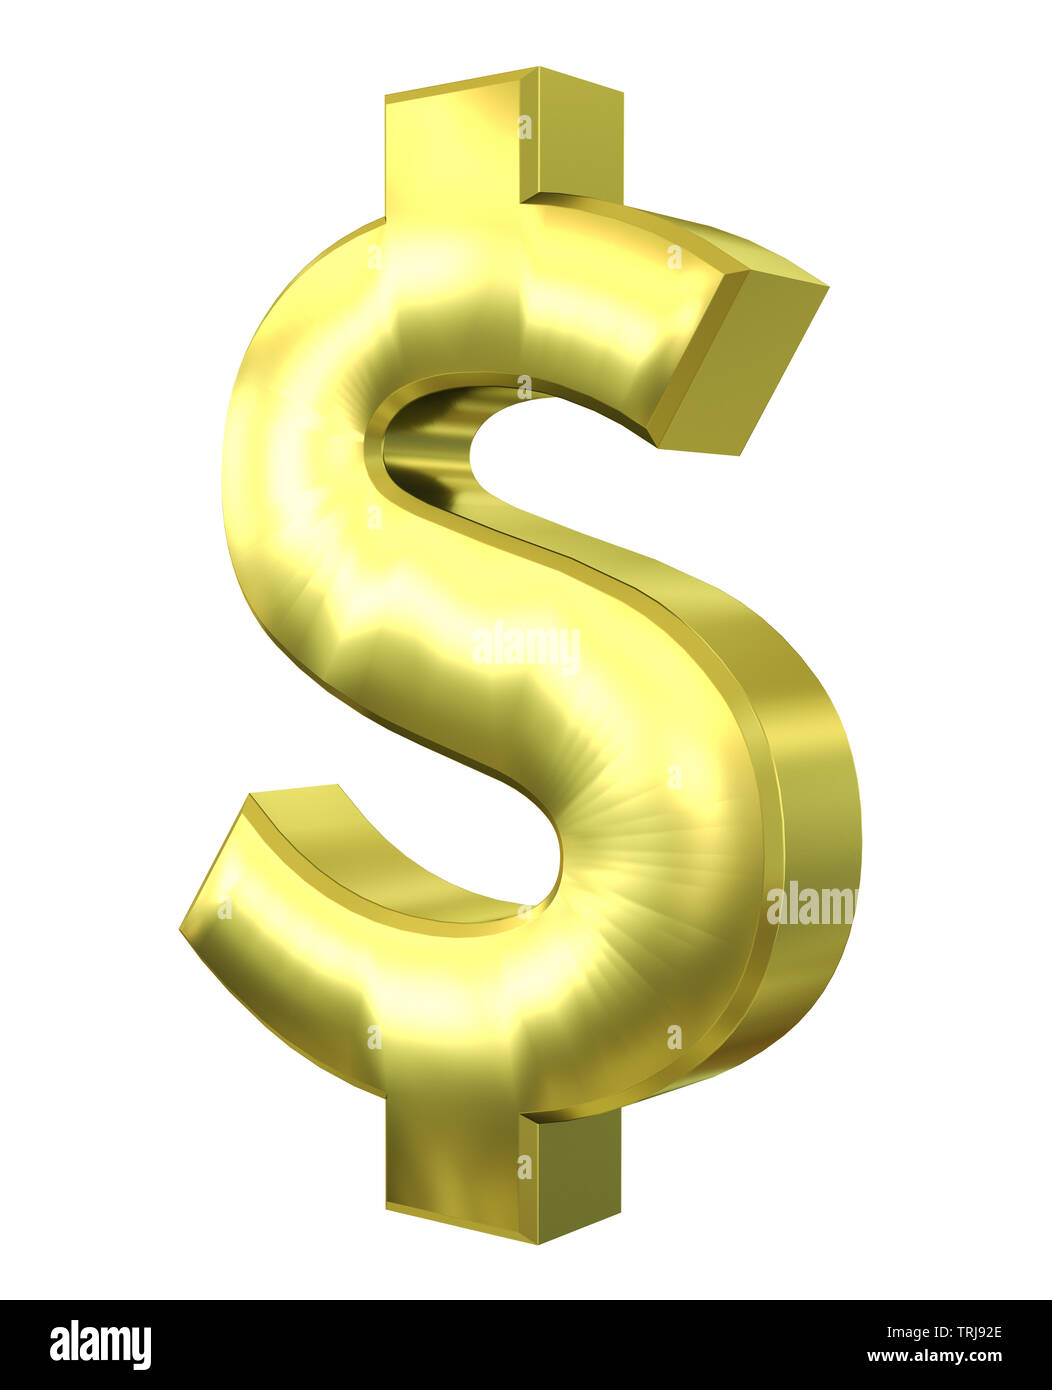 Golden money symbol Stock Photo